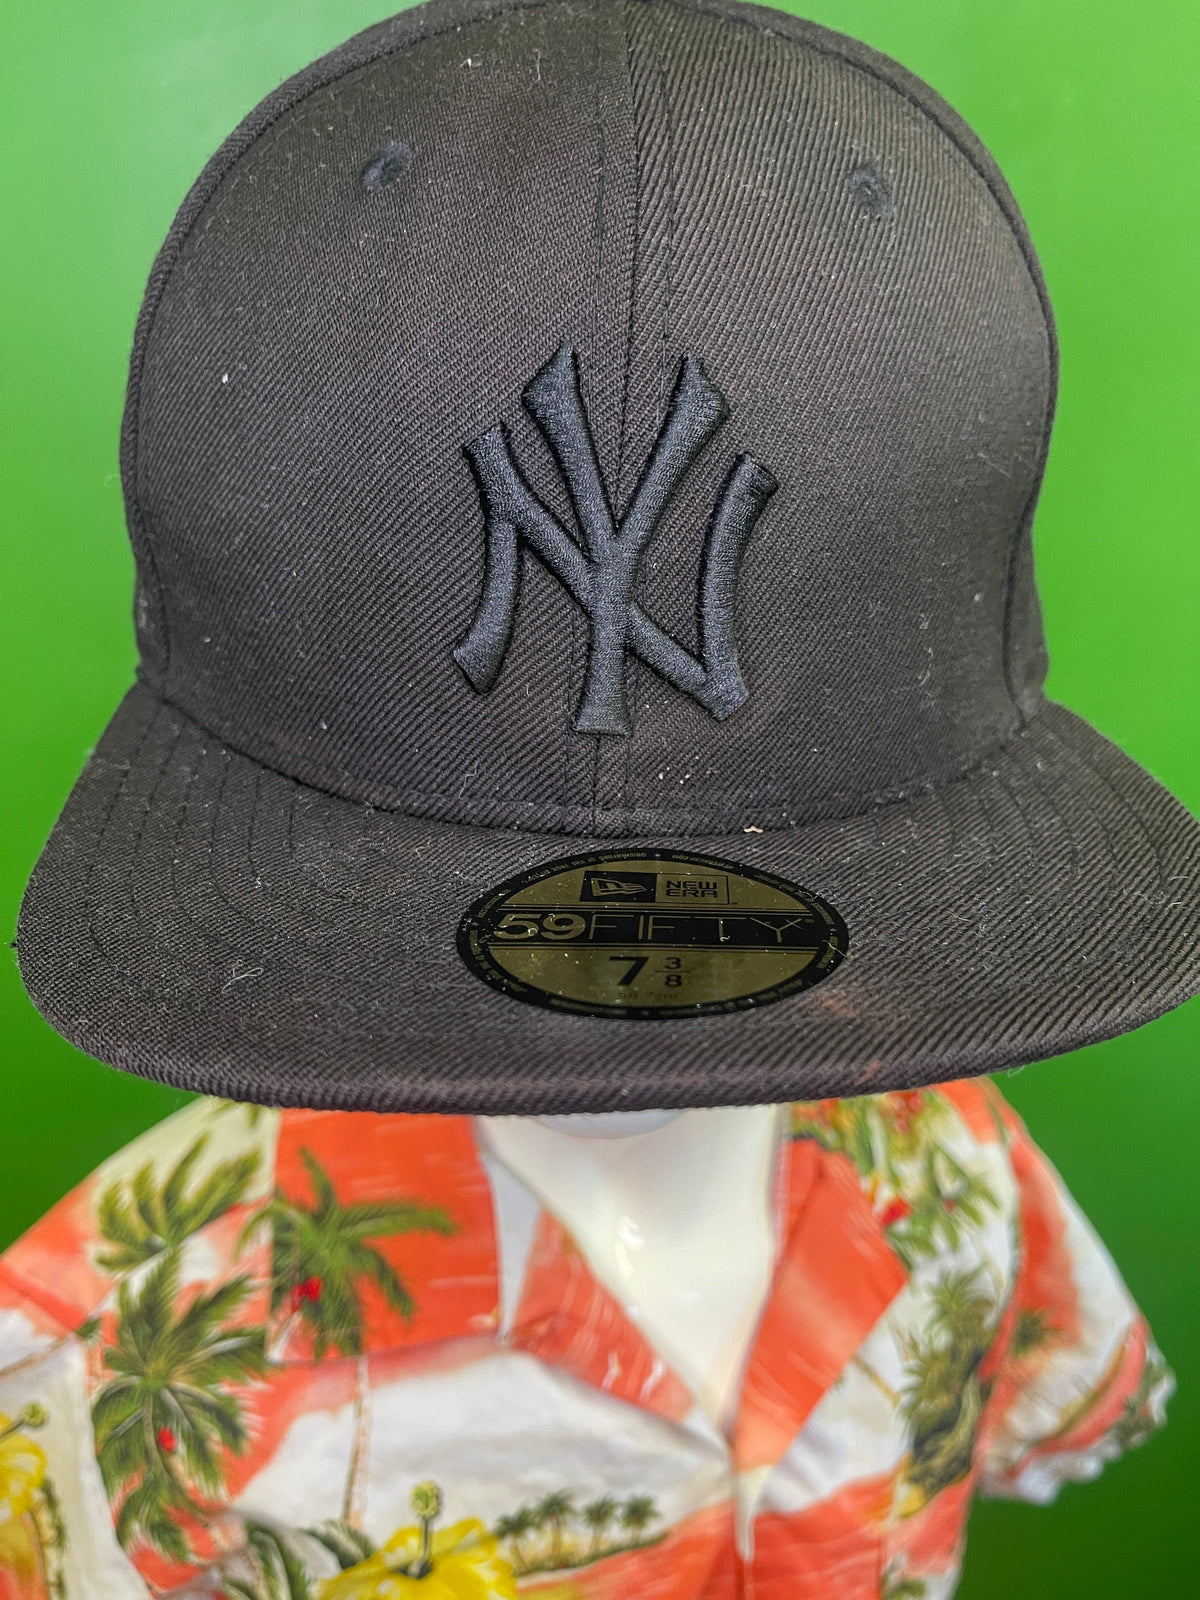 MLB New York Yankees New Era 59FIFTY Baseball Cap/Hat Black Size 7-3/8 NWT